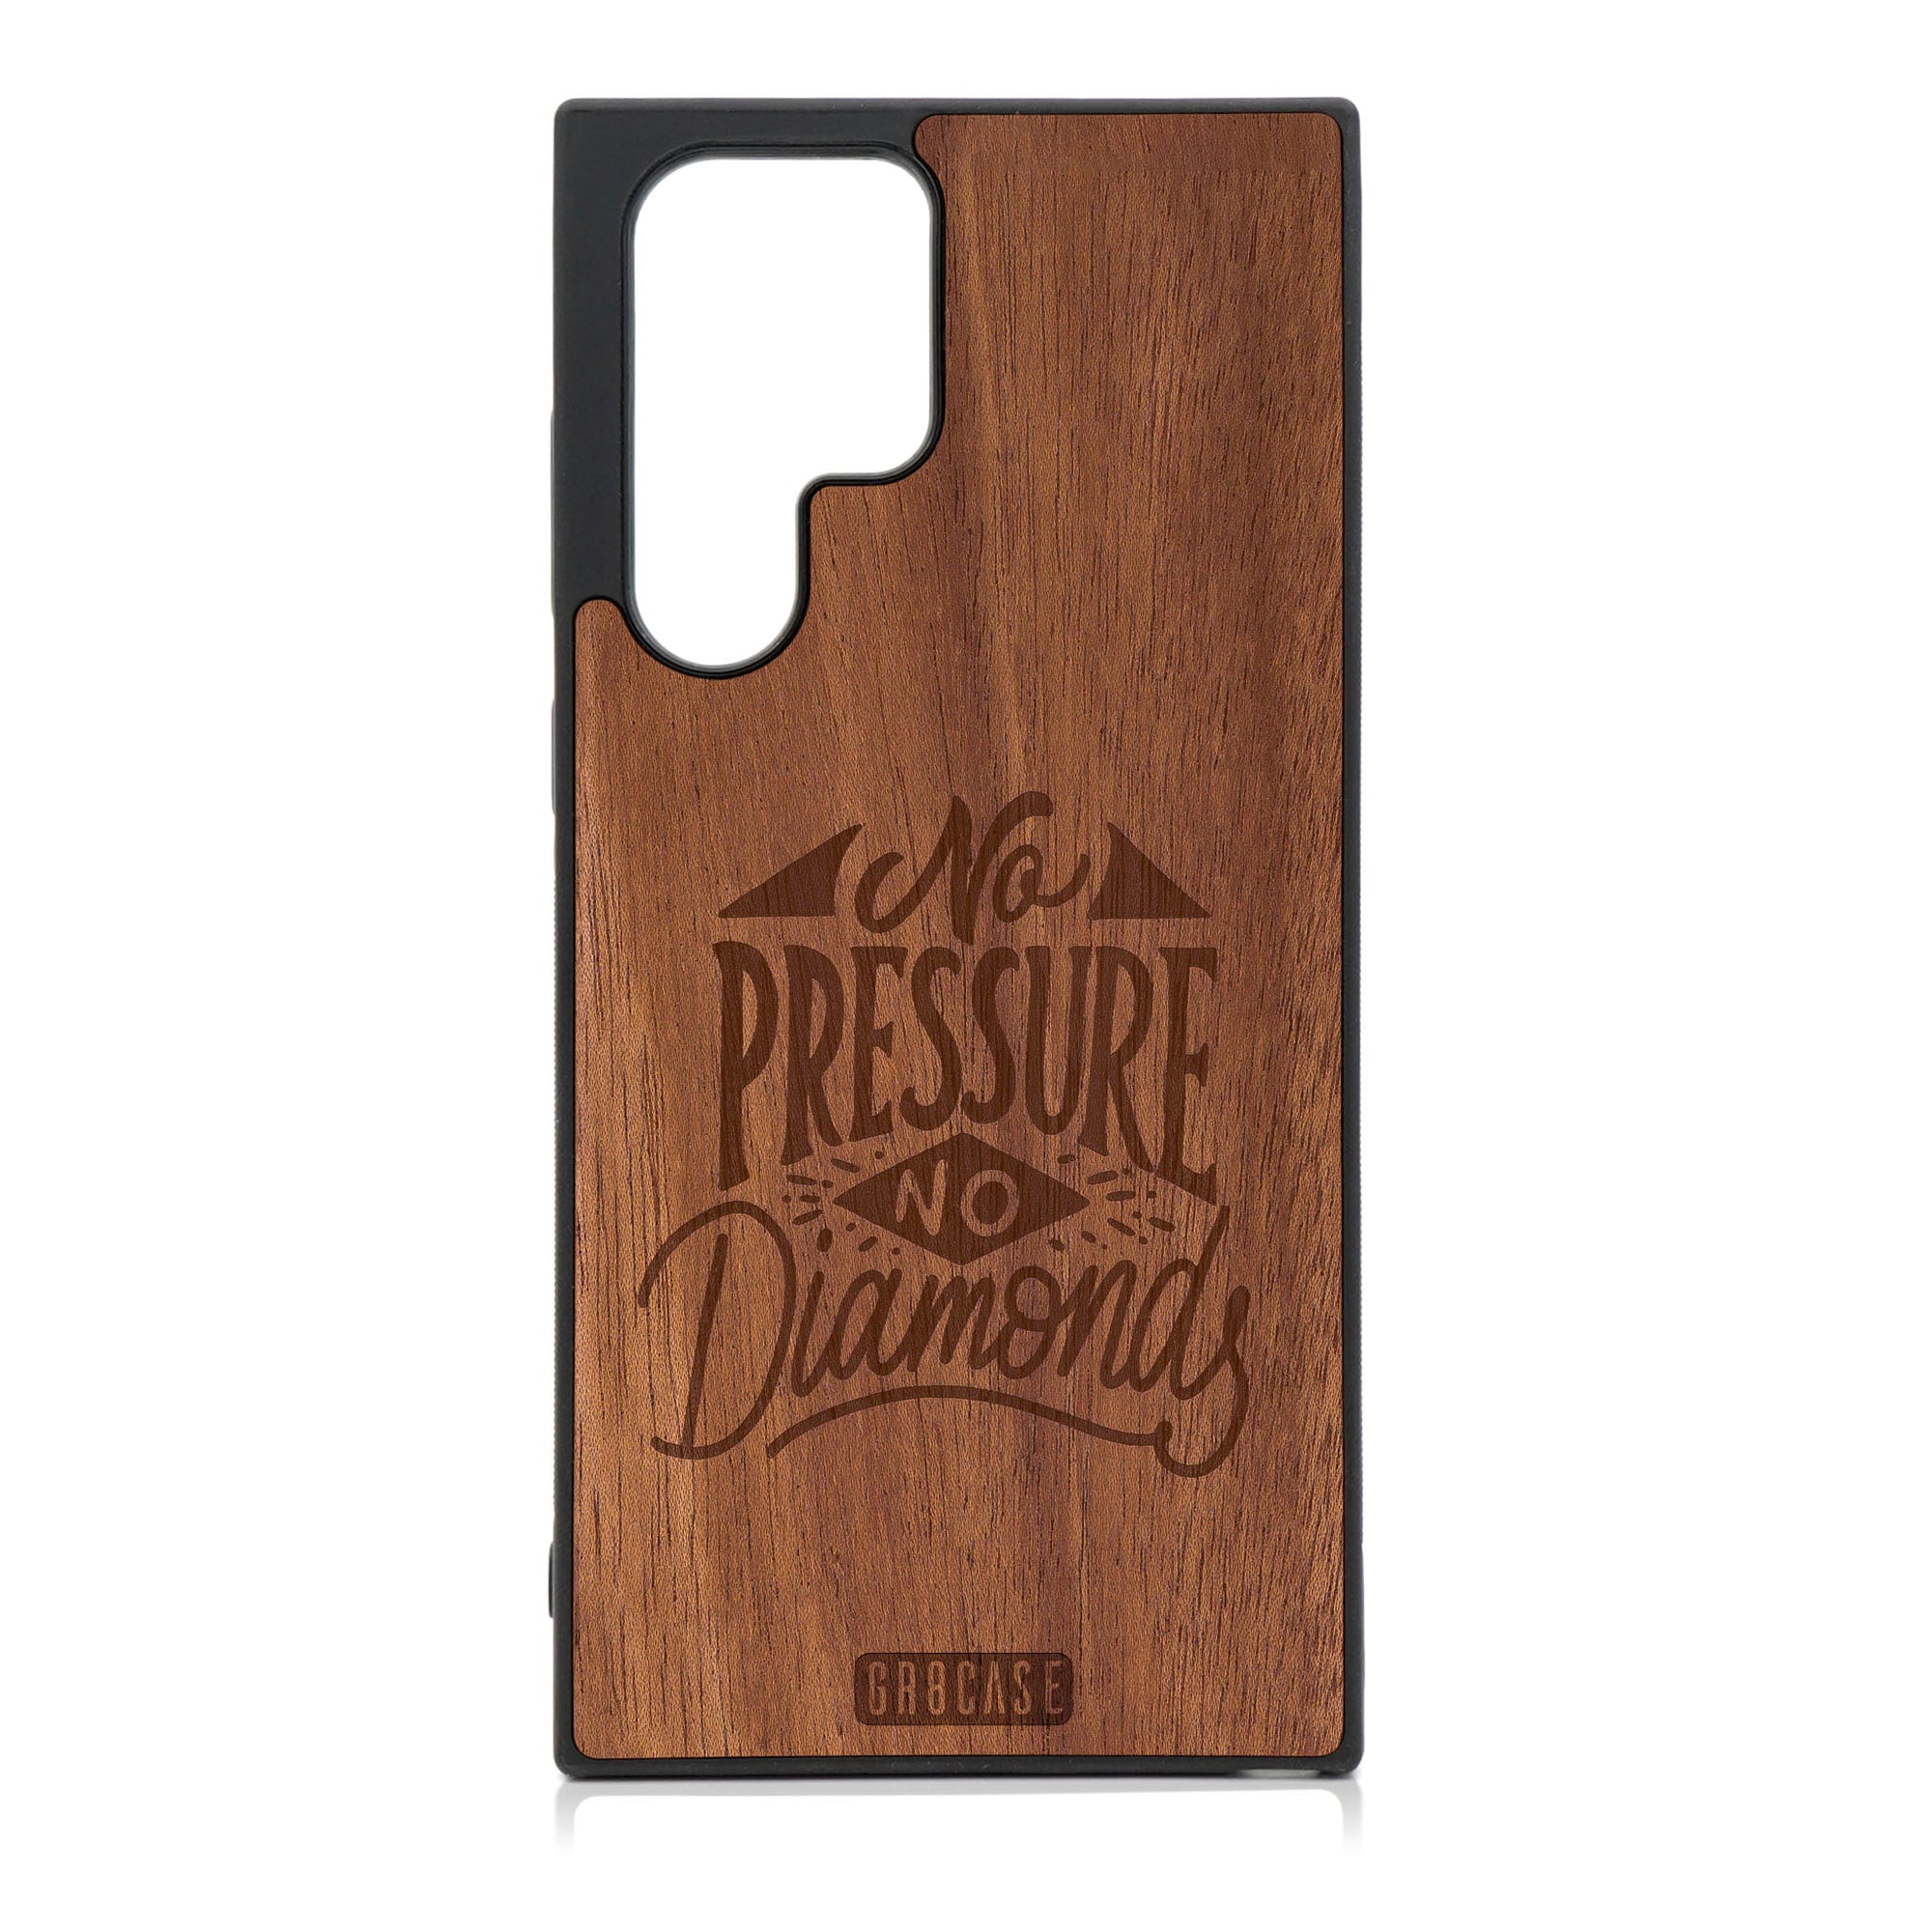 No Pressure No Diamonds Design Wood Phone Case For Galaxy S22 Ultra